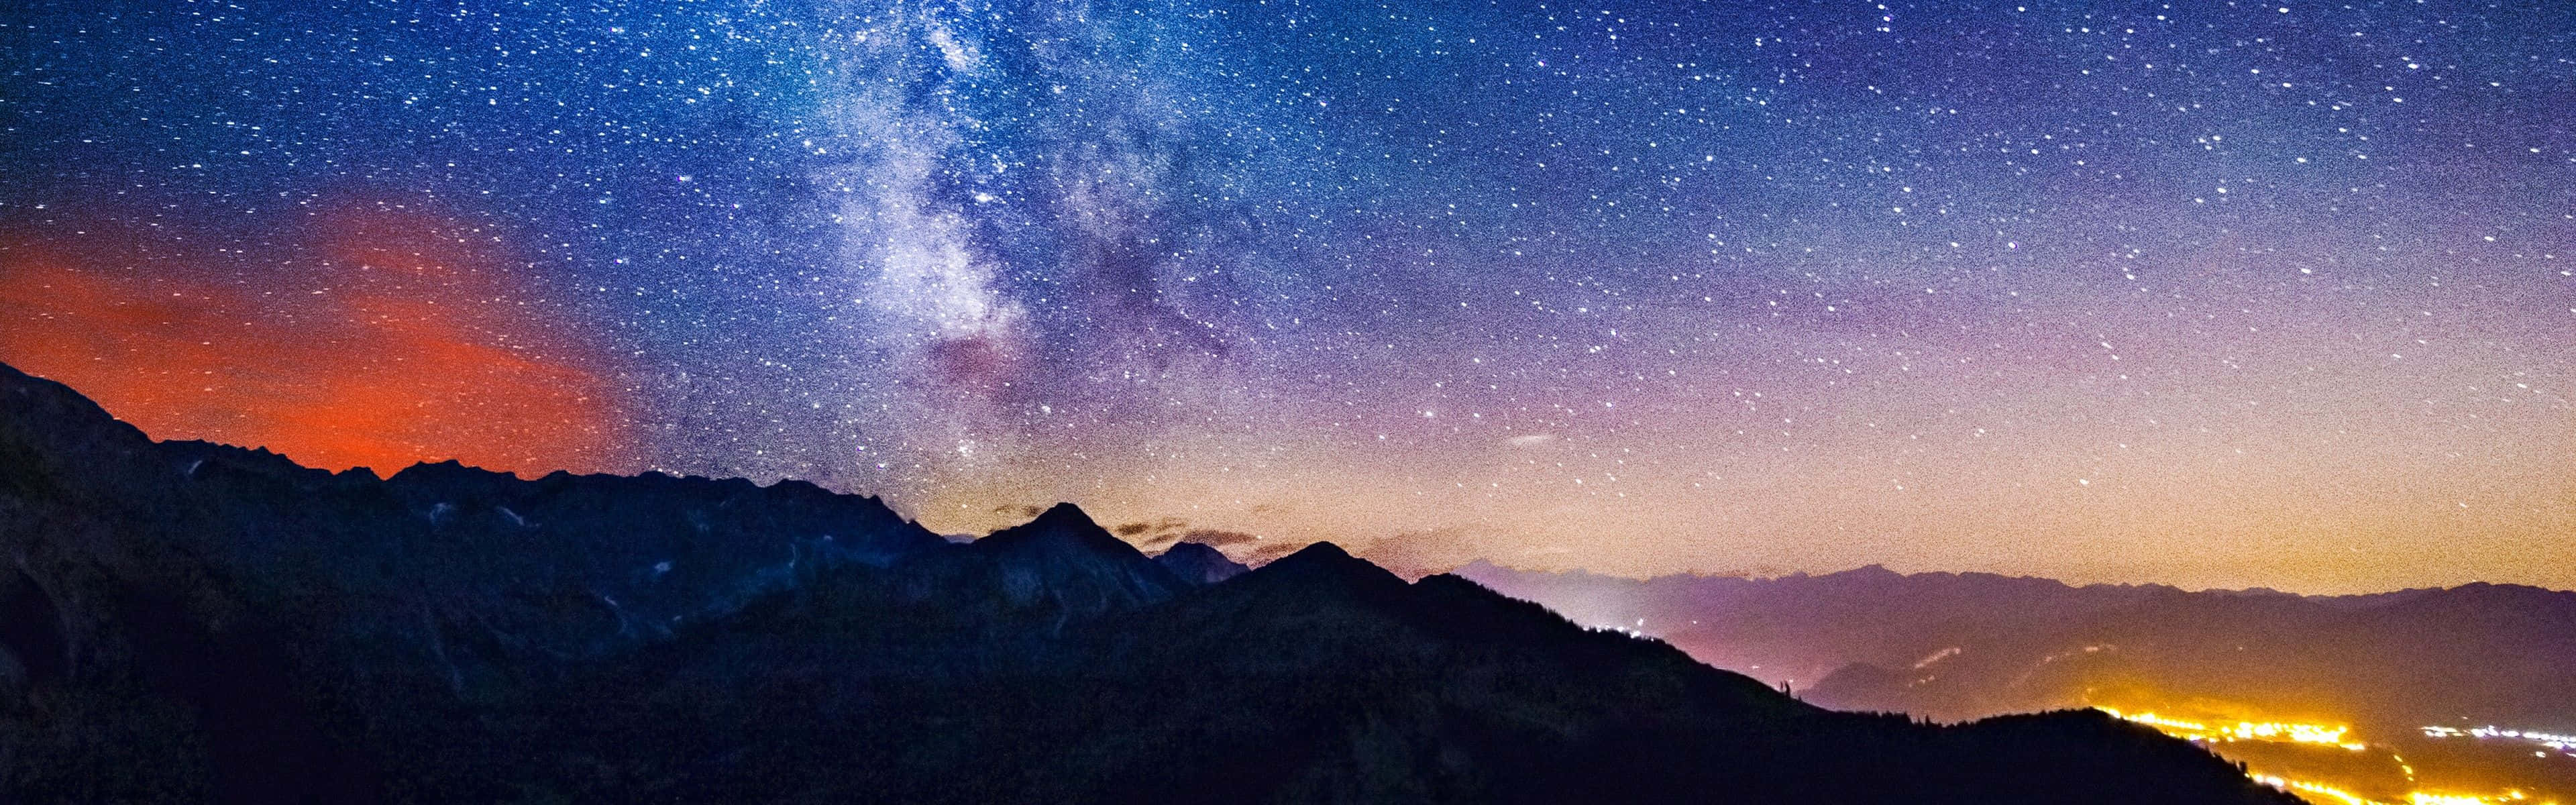 Estrellasy Nebulosas Sobre La Cima De La Montaña - Fondo De Pantalla Ideal Para Tu Monitor